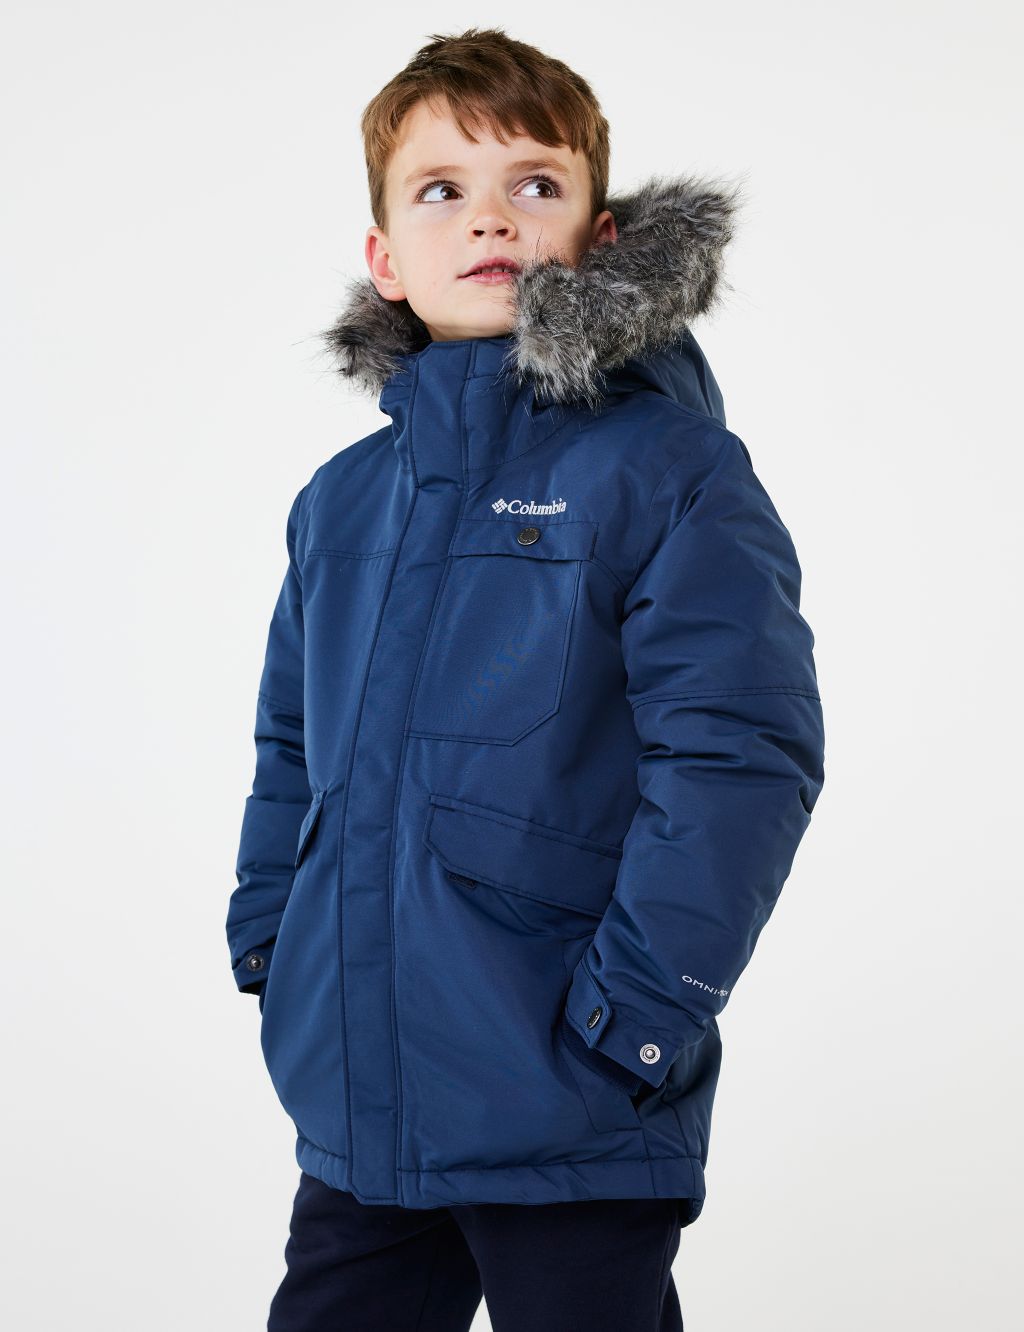 Kids Nordic Strider Hooded Raincoat image 8